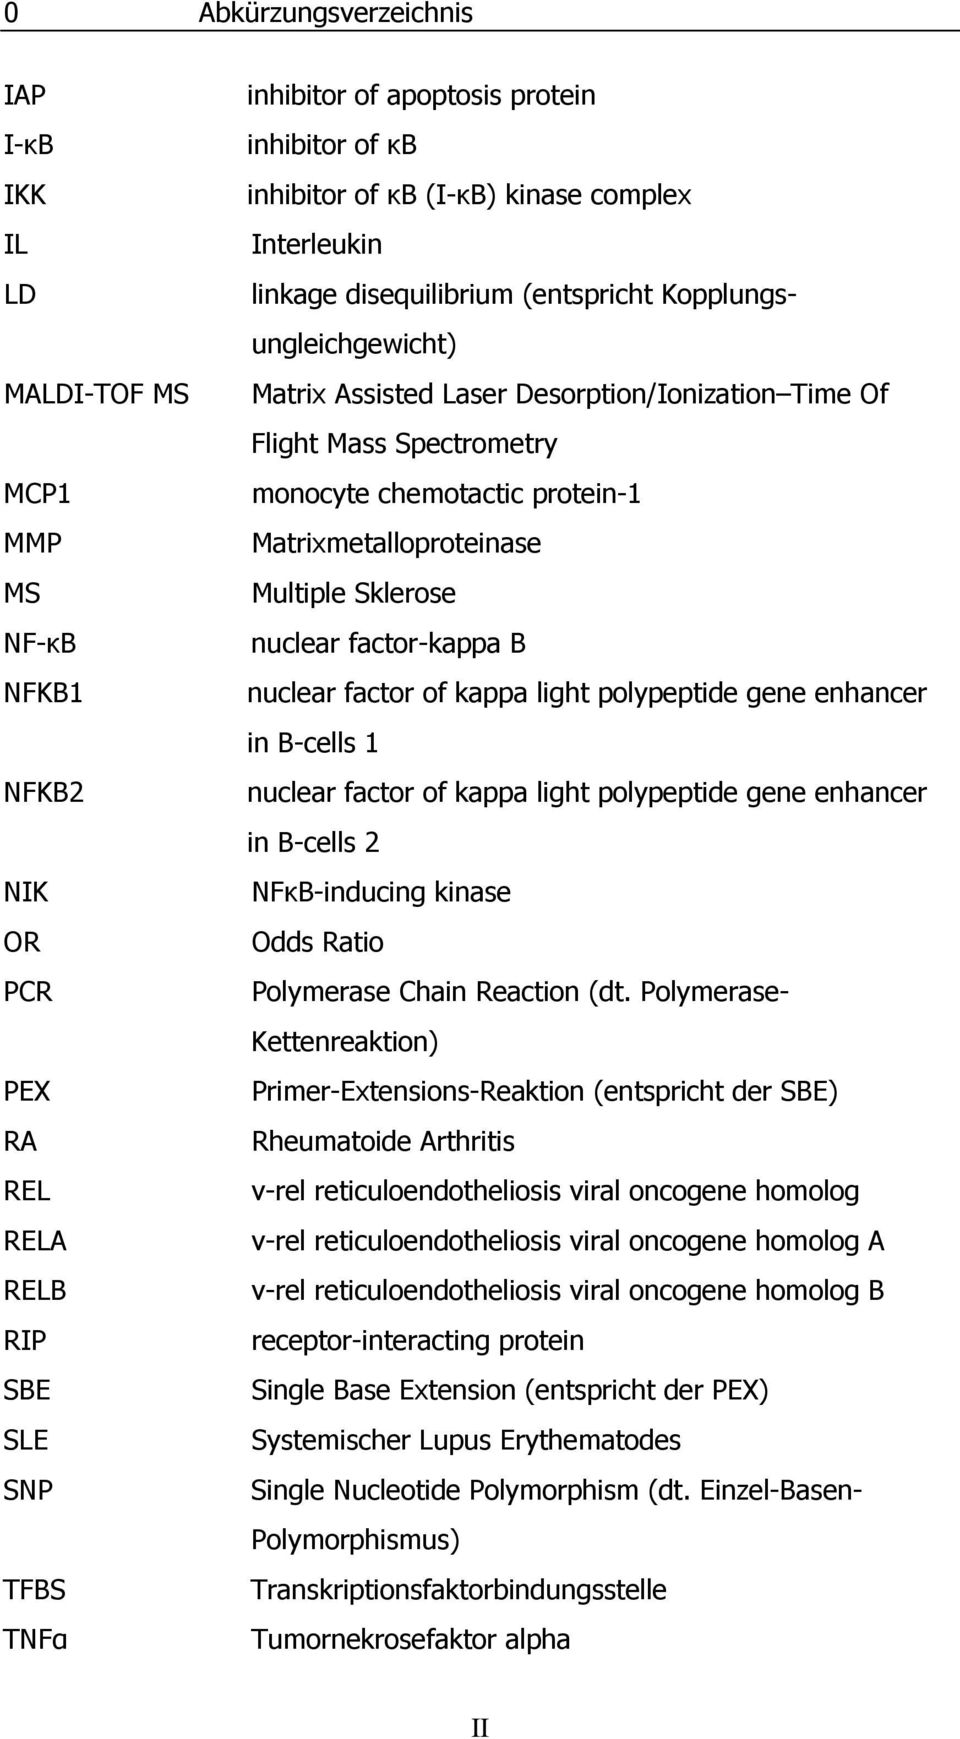 chemotactic protein-1 Matrixmetalloproteinase Multiple Sklerose nuclear factor-kappa B nuclear factor of kappa light polypeptide gene enhancer in B-cells 1 nuclear factor of kappa light polypeptide